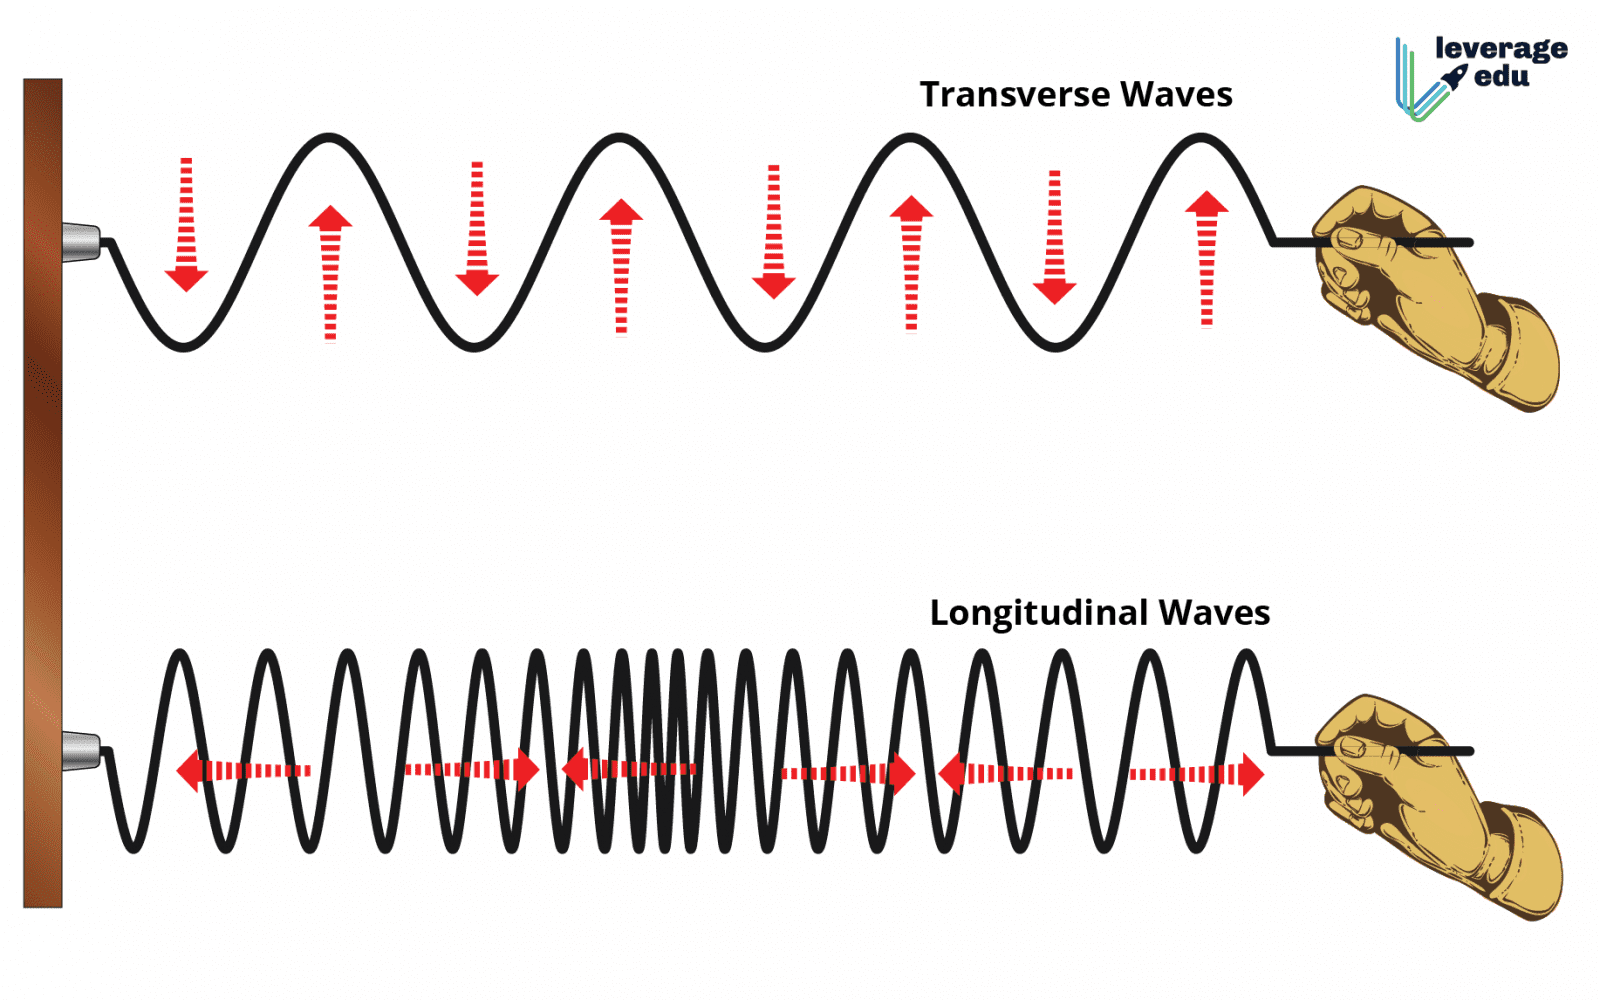 longitudinal waves which travel